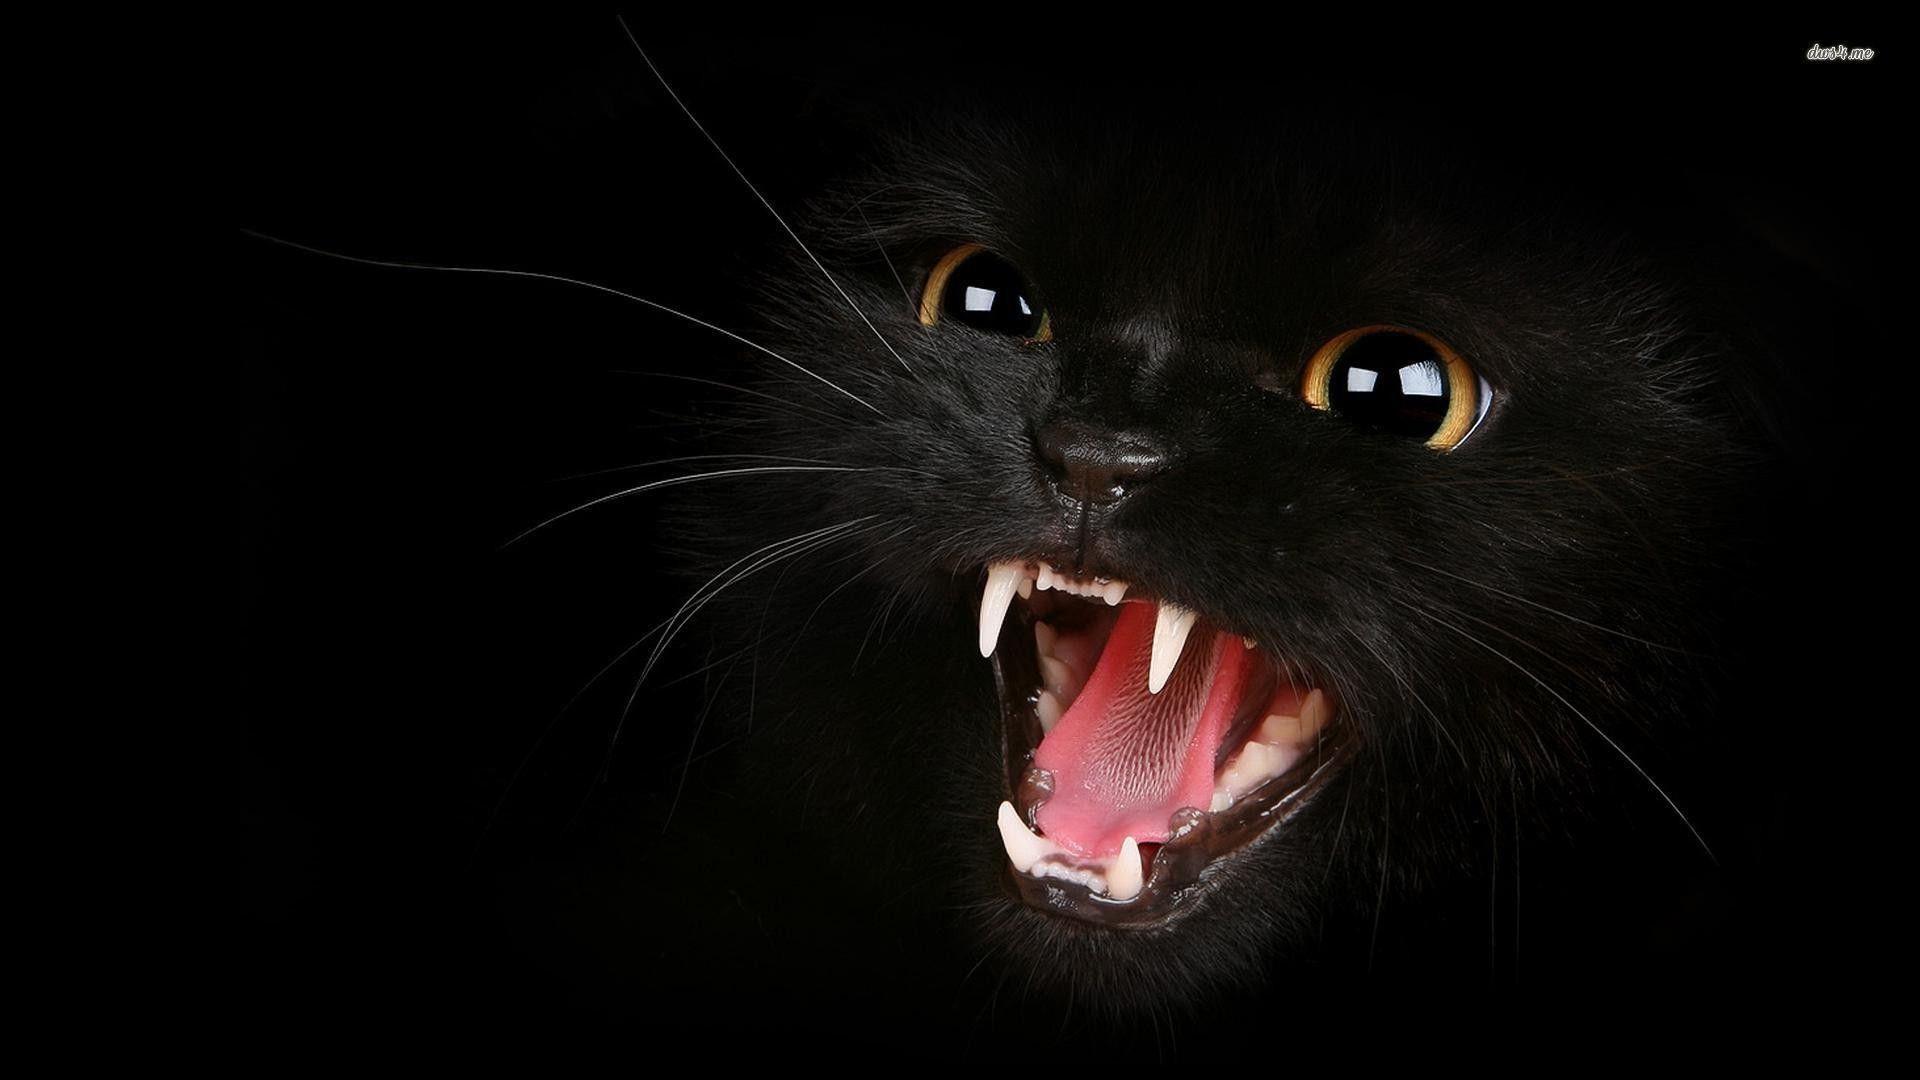 Black Cat Background